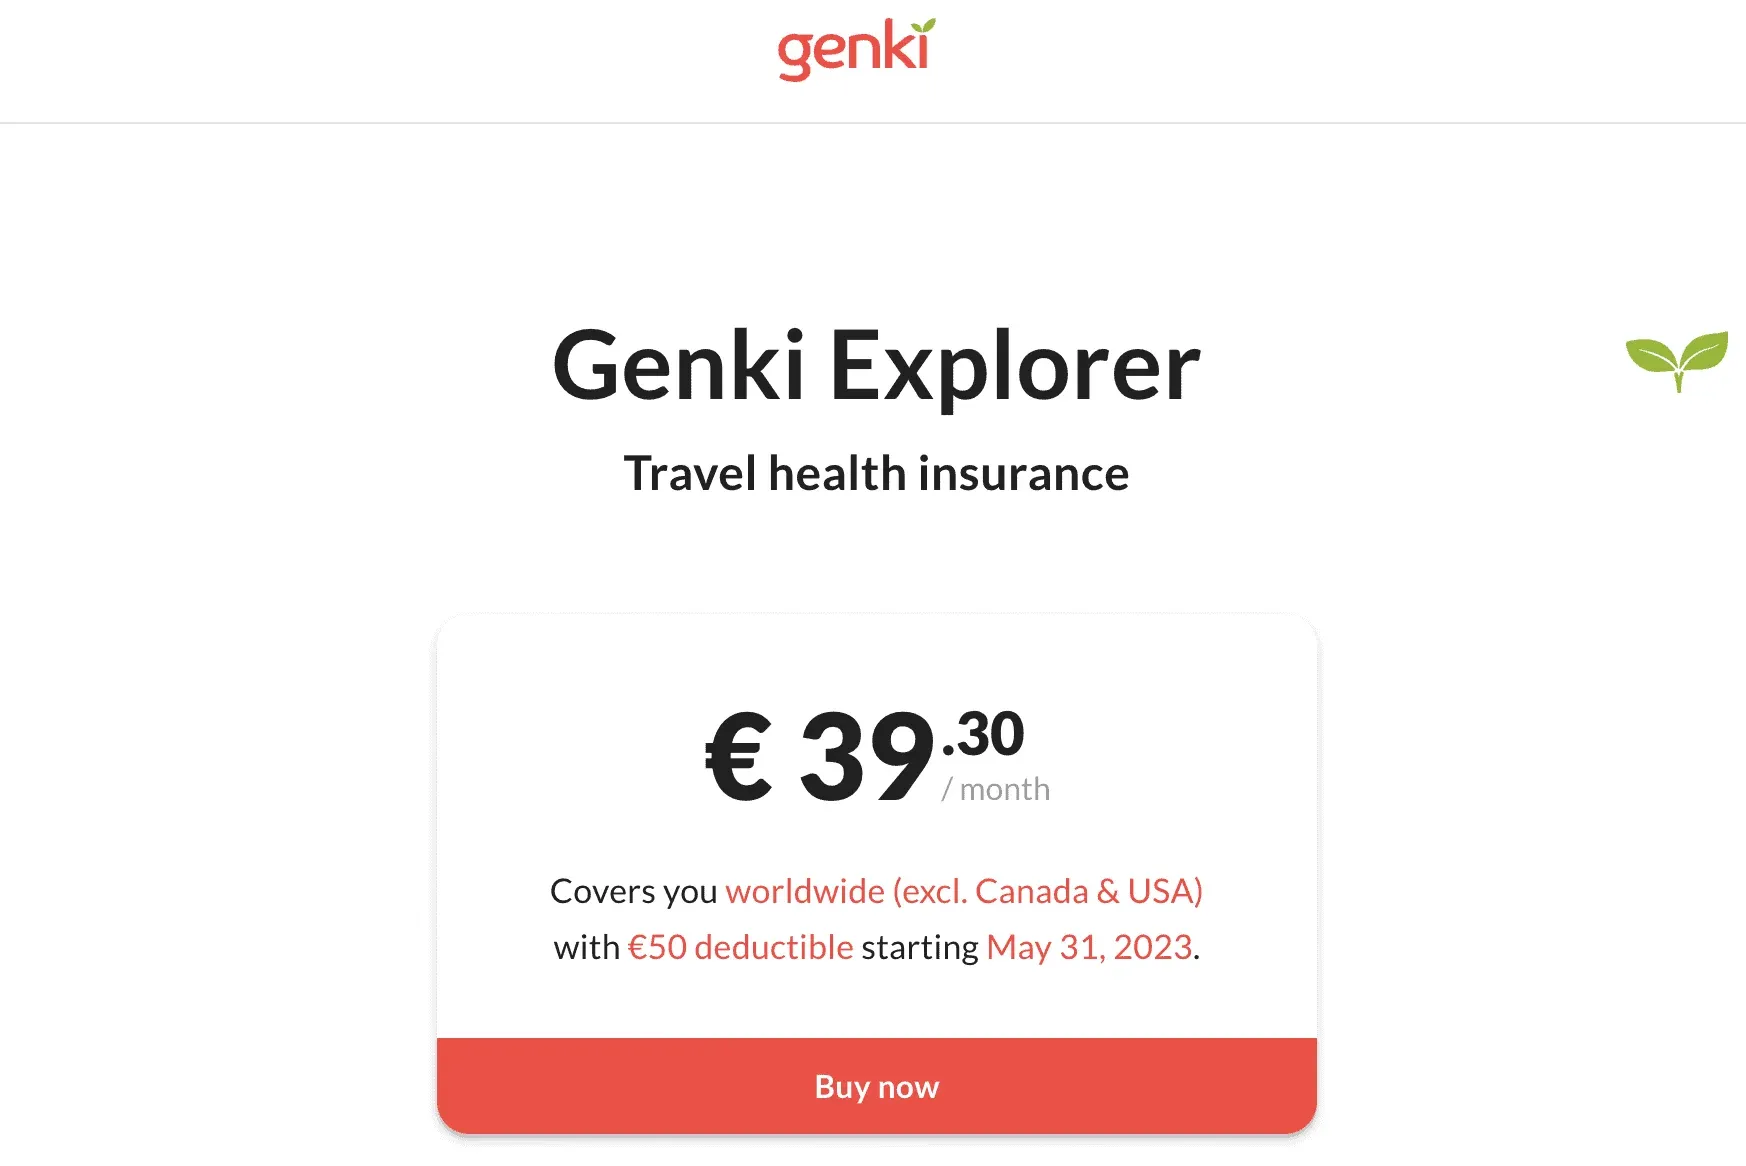 Genki Explorer prices